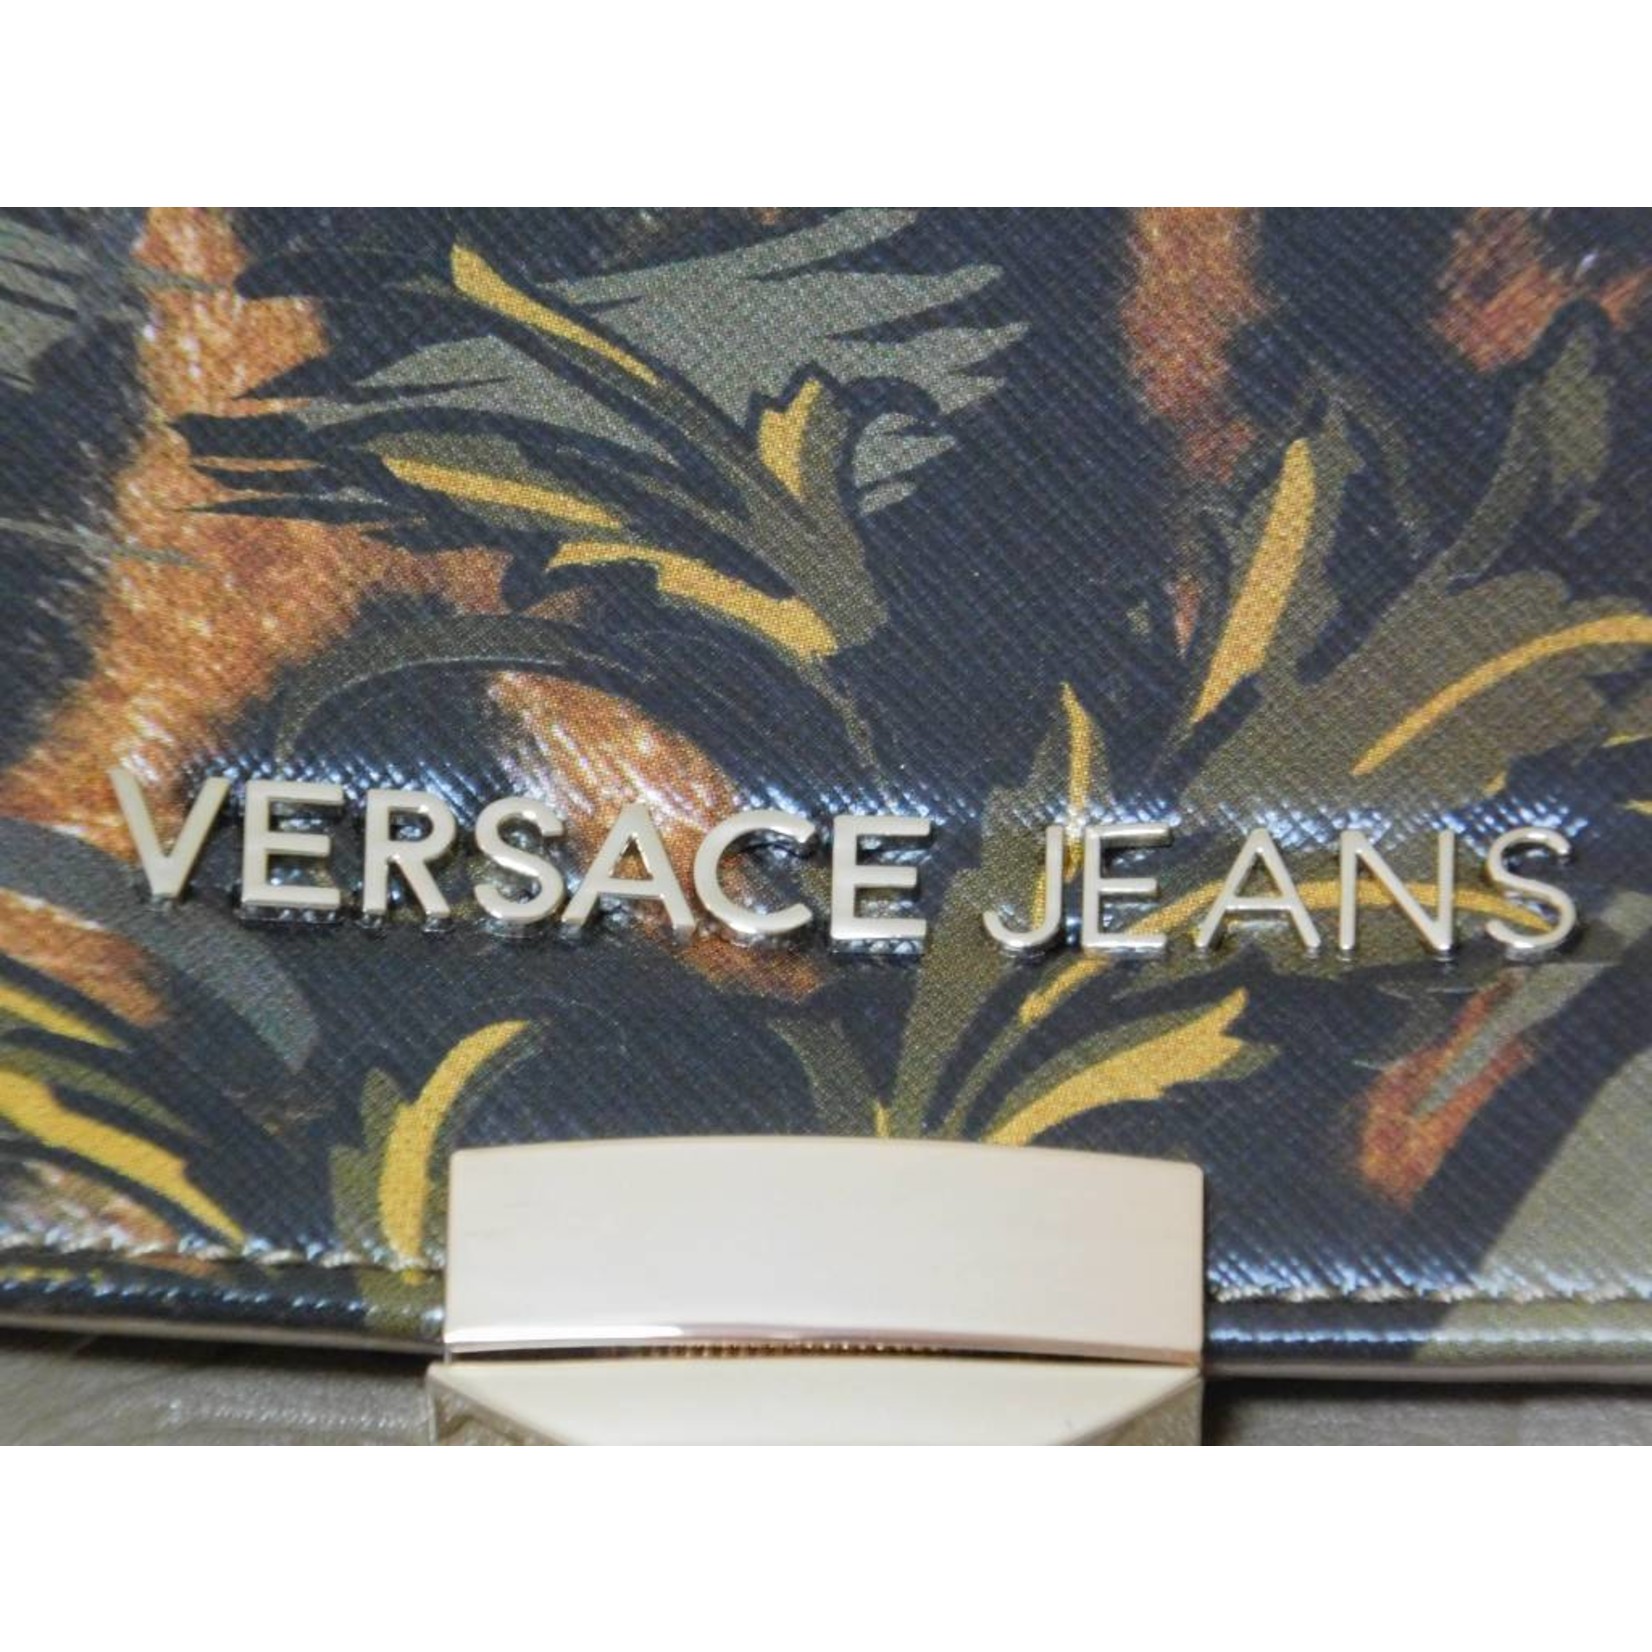 Versace Jeans Handtasche Damen Kunstleder - Braun - Geprägt Blumen Muster - Abnehmbarer Schultergurt - Schnappverschluss